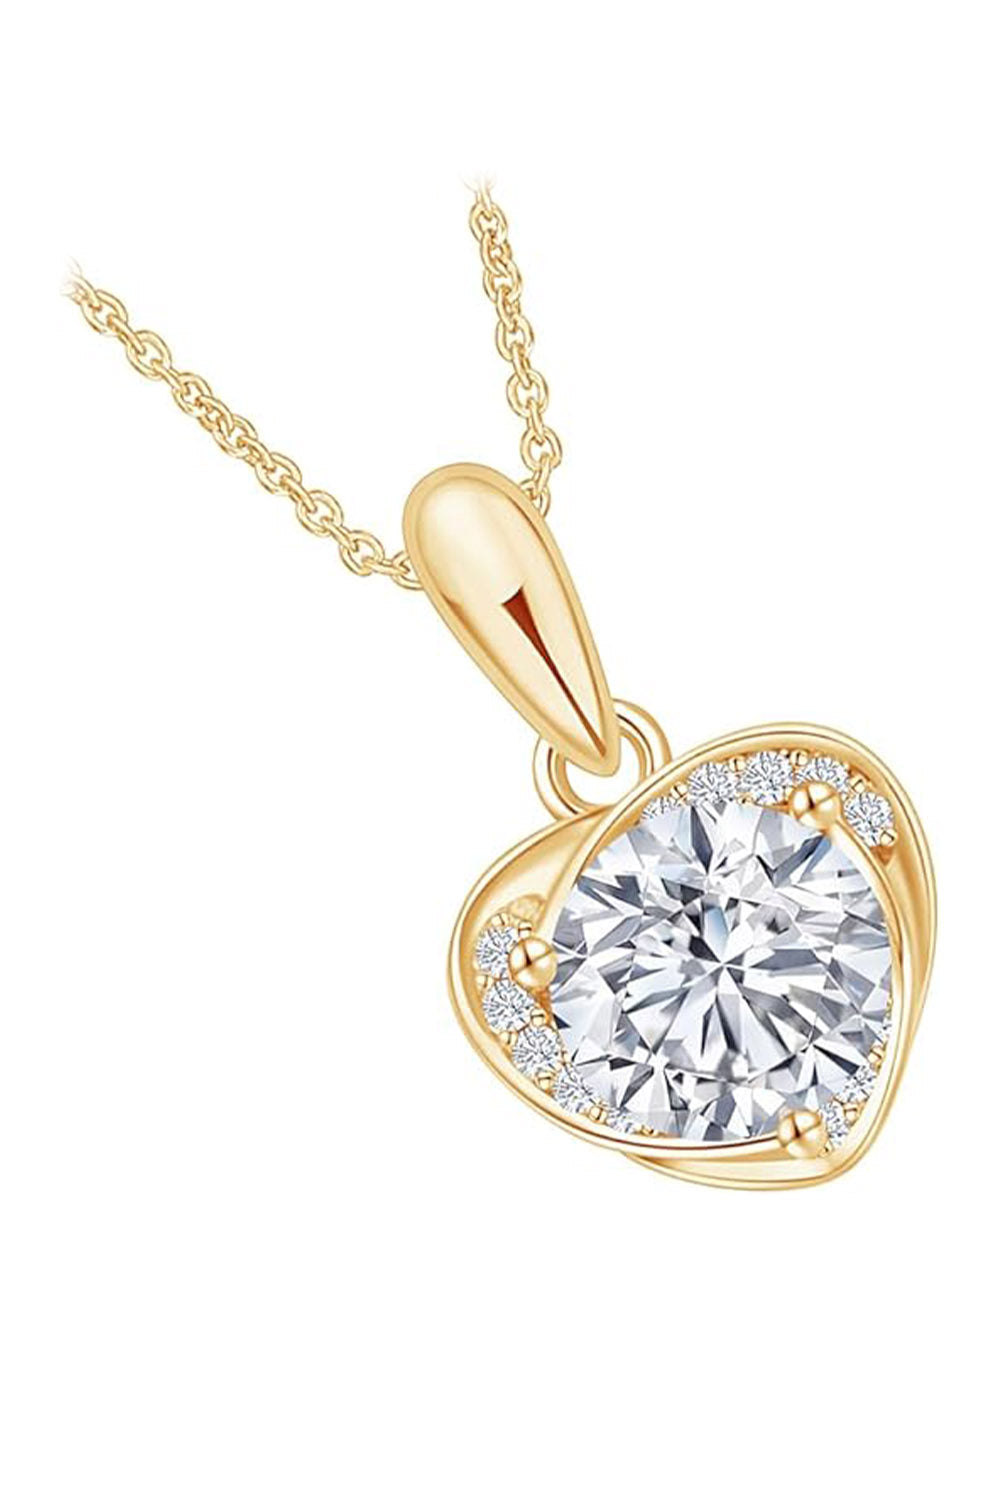 Yellow Gold Color Moissanite Diamond Love Heart Pendant Necklace 